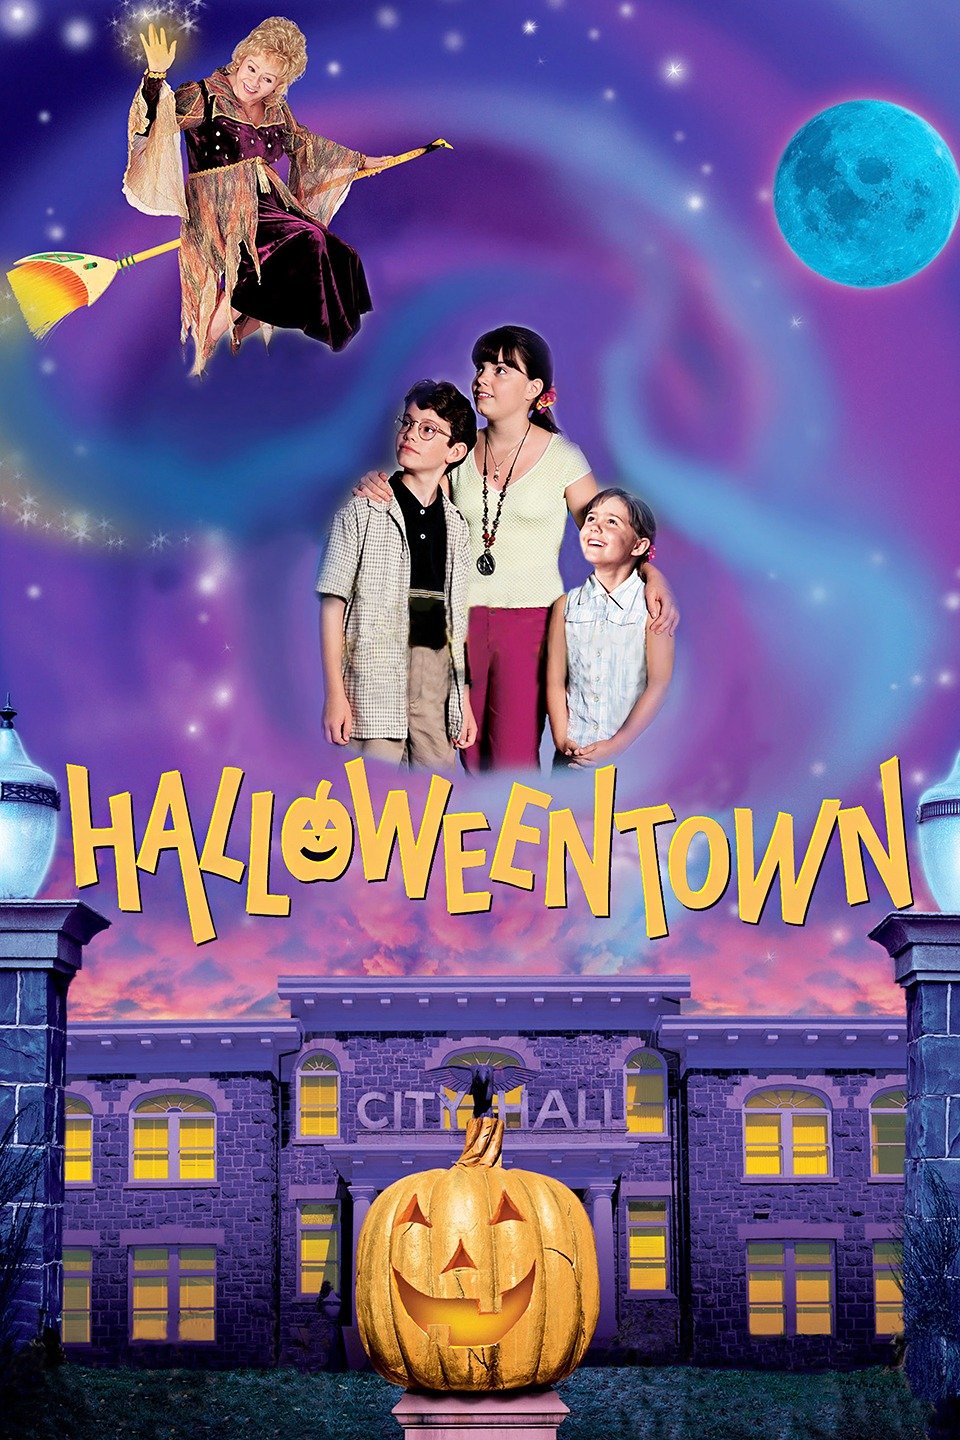 halloweentown full movie download